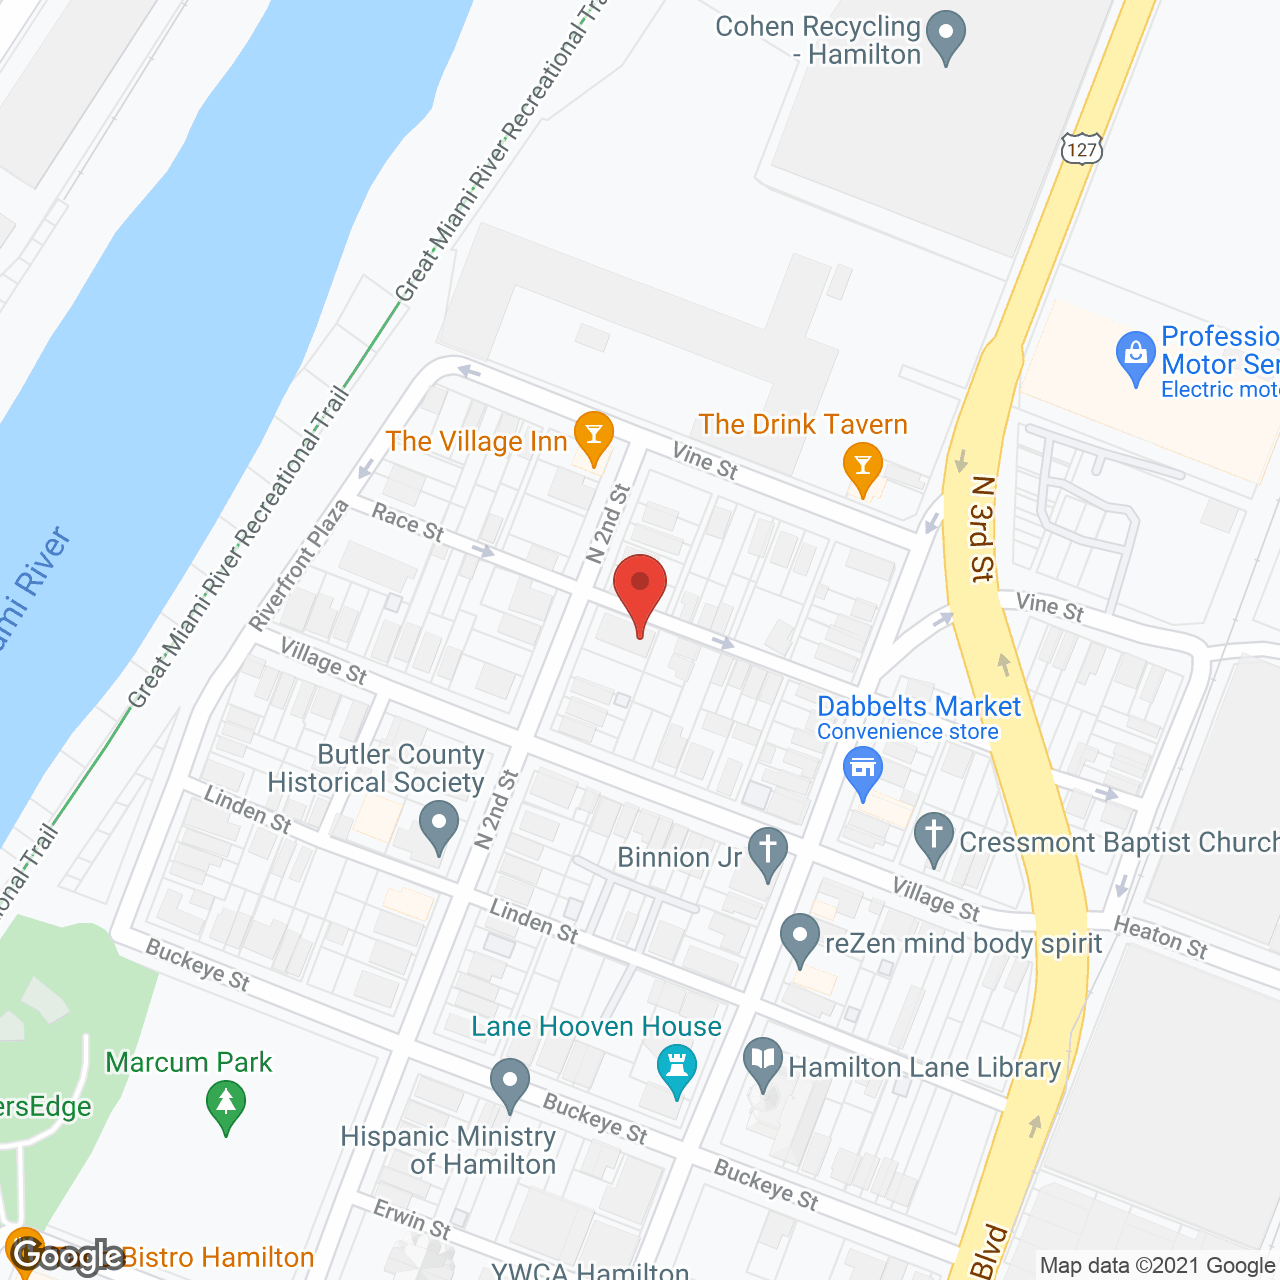 Center Haven - Hamilton in google map